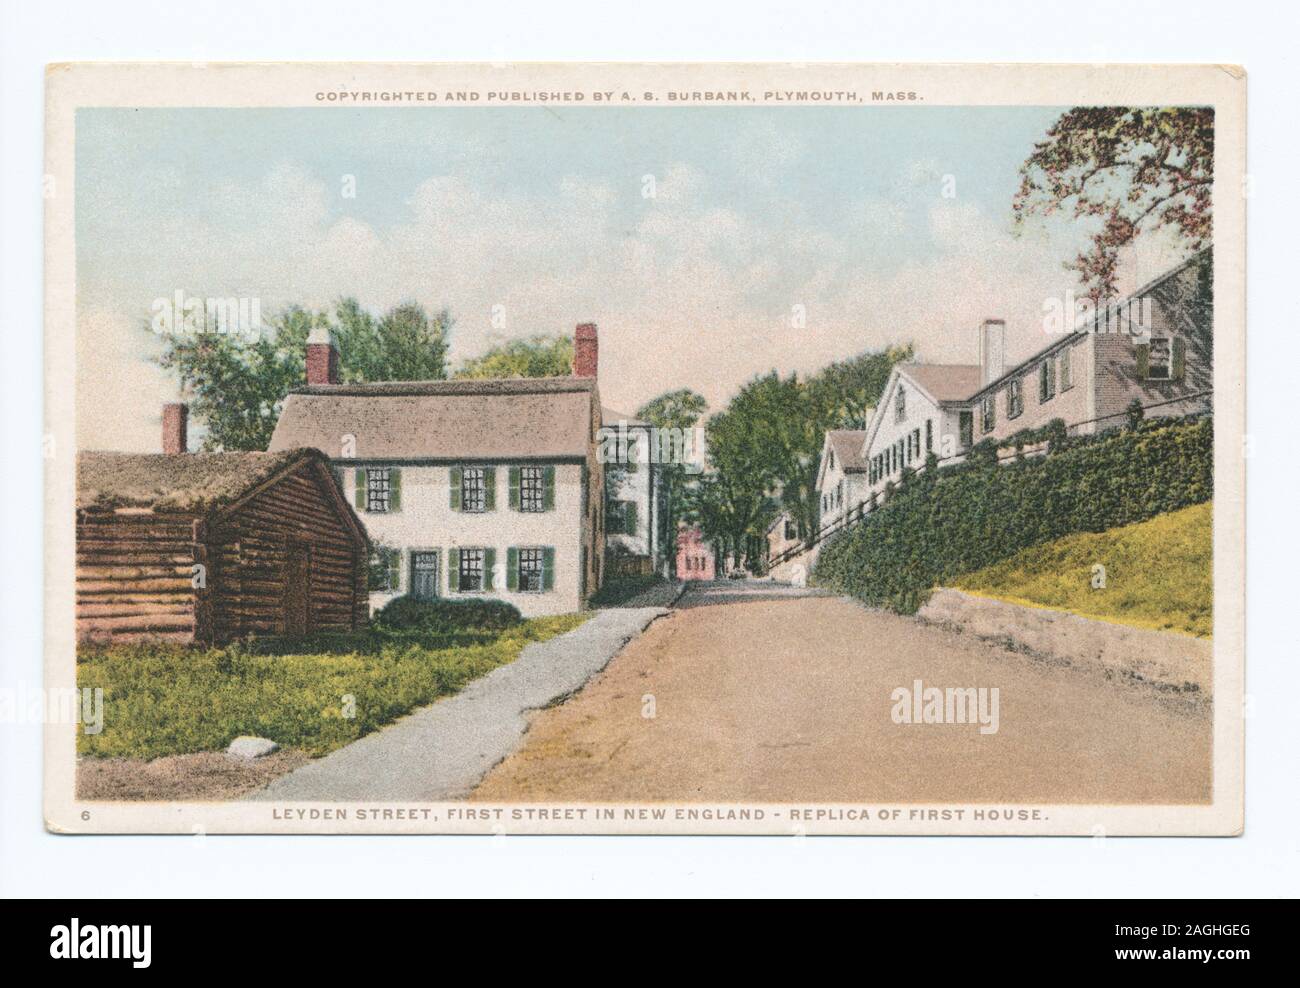 Leyden Street, First Street in New England - Replica of First House; Leyden Street, First Street in New England - Replica of First House Stock Photo